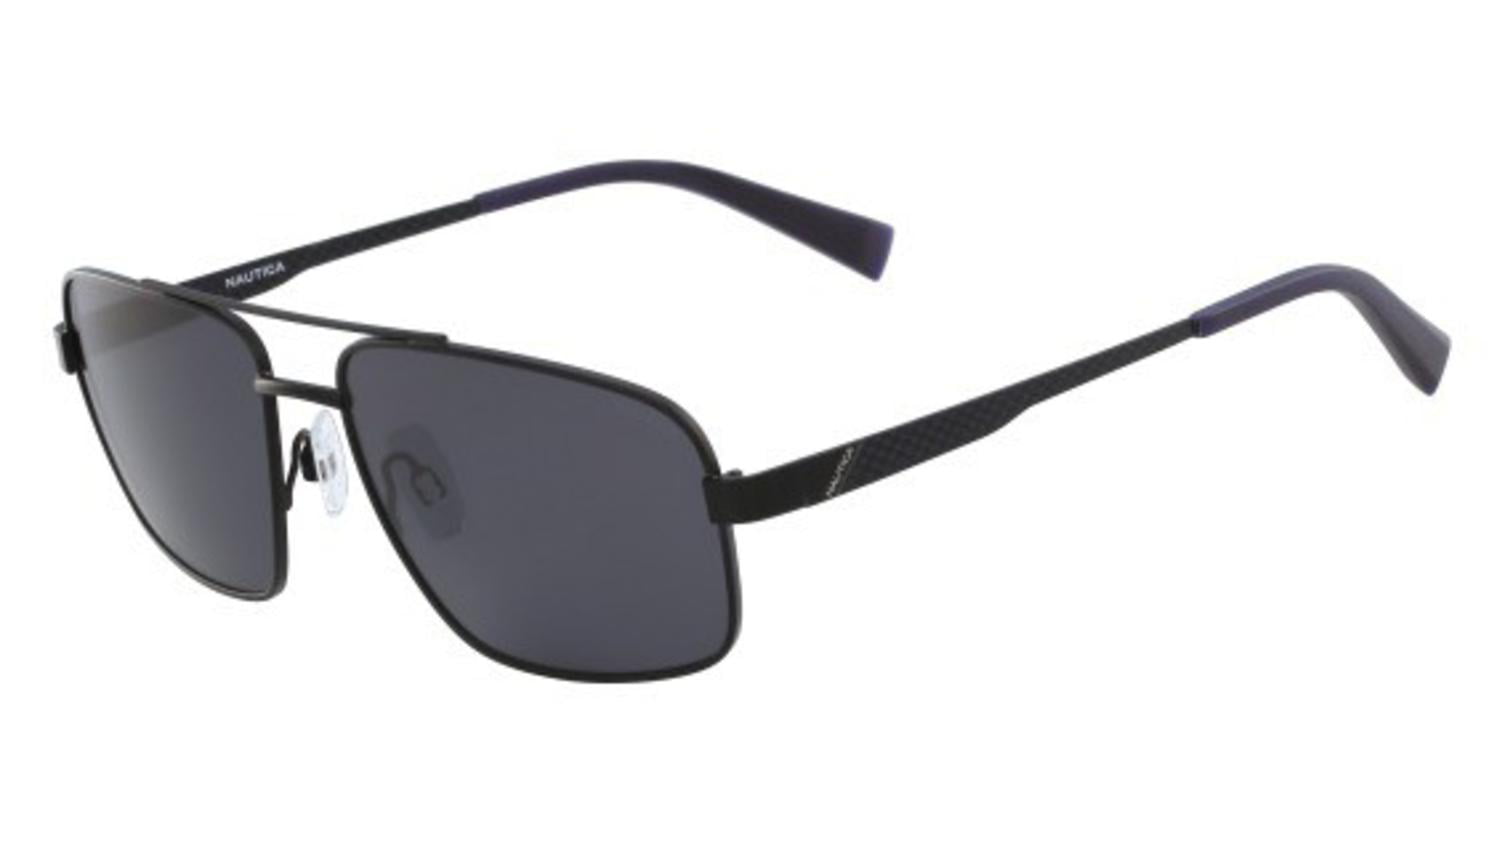 Nautica Metal Frame Green Lens Men's Sunglasses N5110S680925913001 